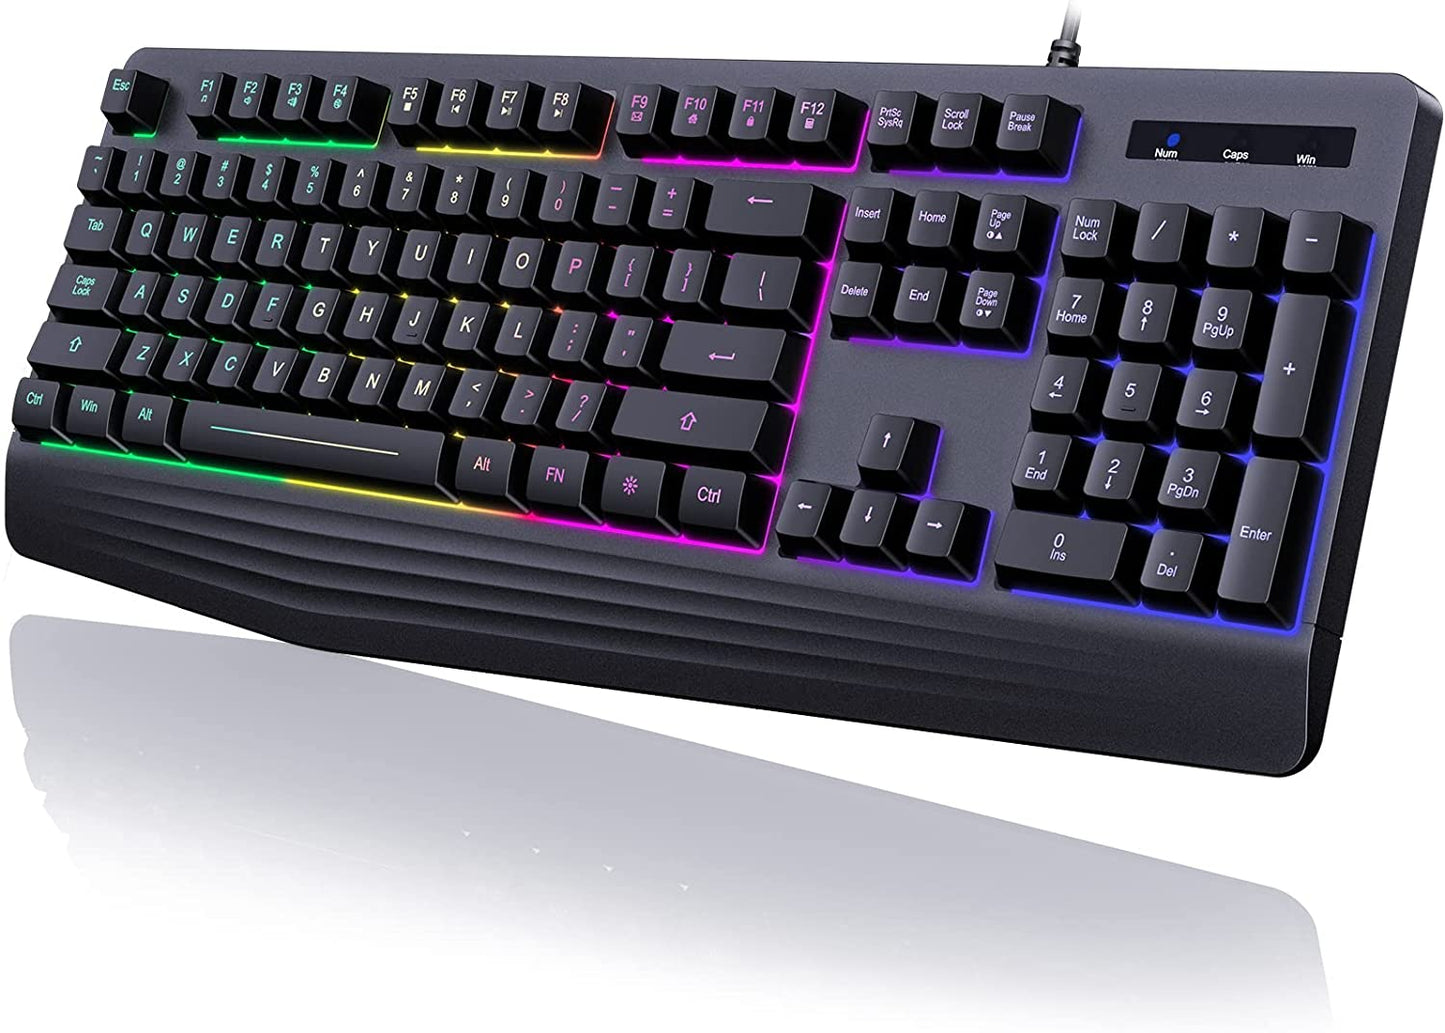 Yesbeaut Gaming Keyboard, 7-Color Rainbow LED Backlit, 104 Keys Quiet Light Up Keyboard